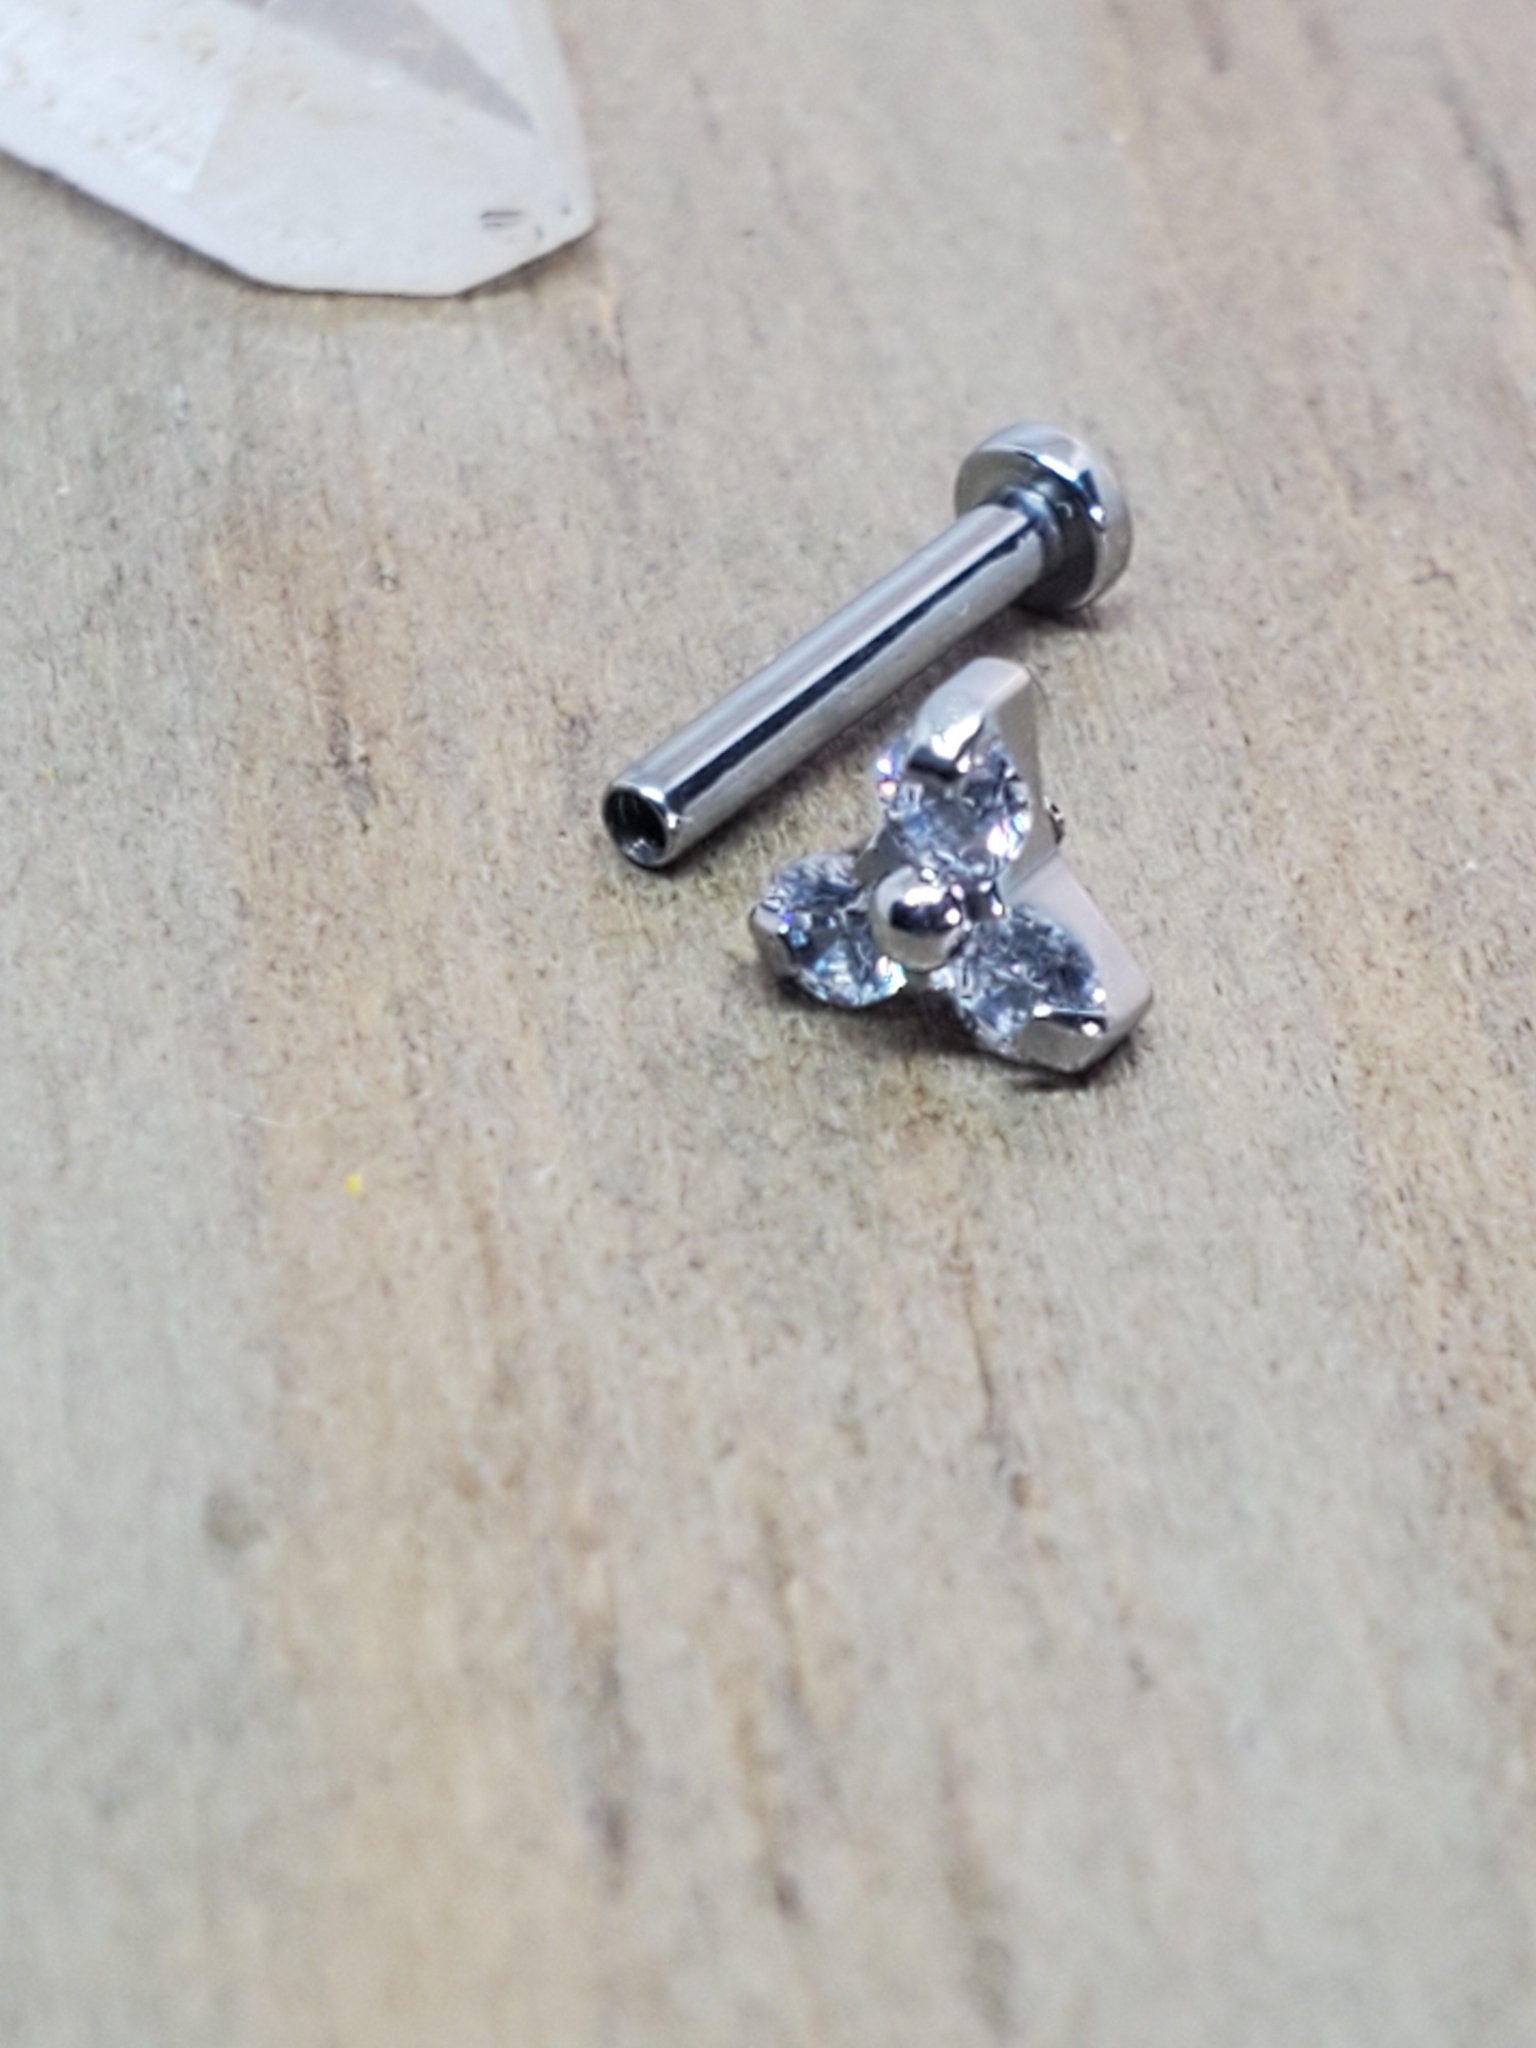 Triple gem cluster earring 18g-16g tragus piercing stud conch jewelry internally threaded hypoallergenic titanium - SirenBodyJewelry